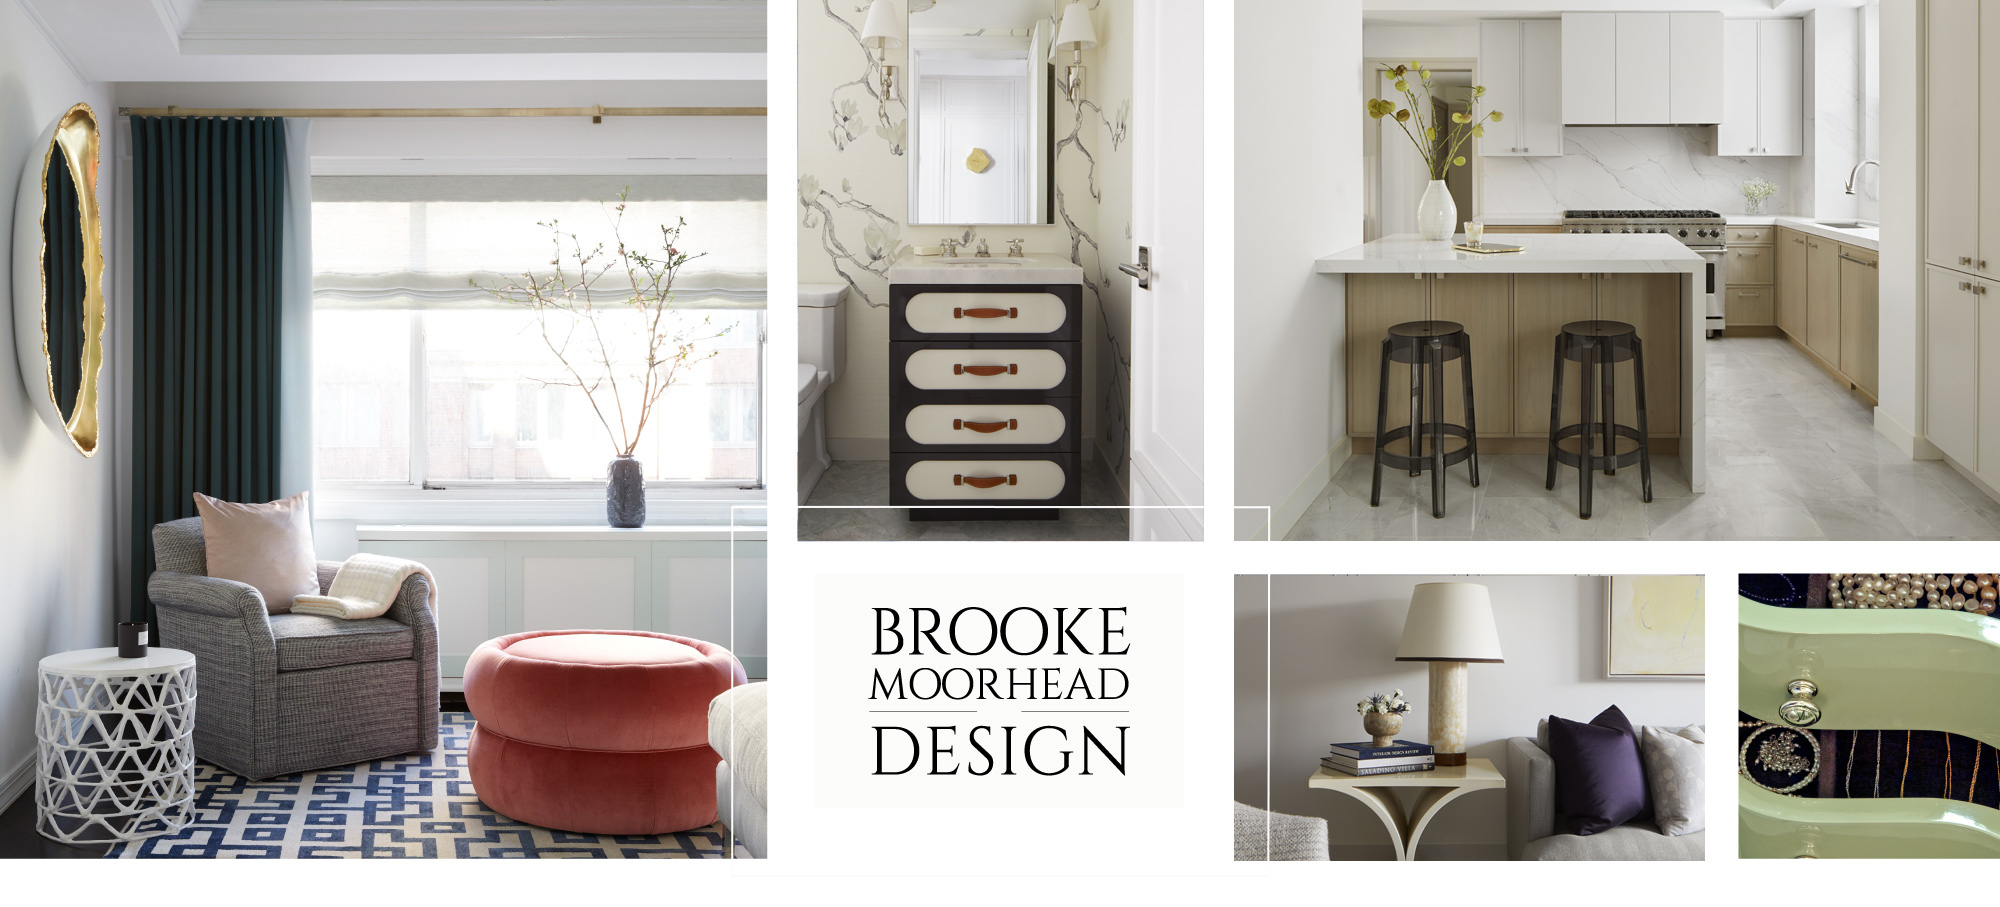 Brooke-Moorhead-interior-design-hero-collage-gird-photo-2021-3